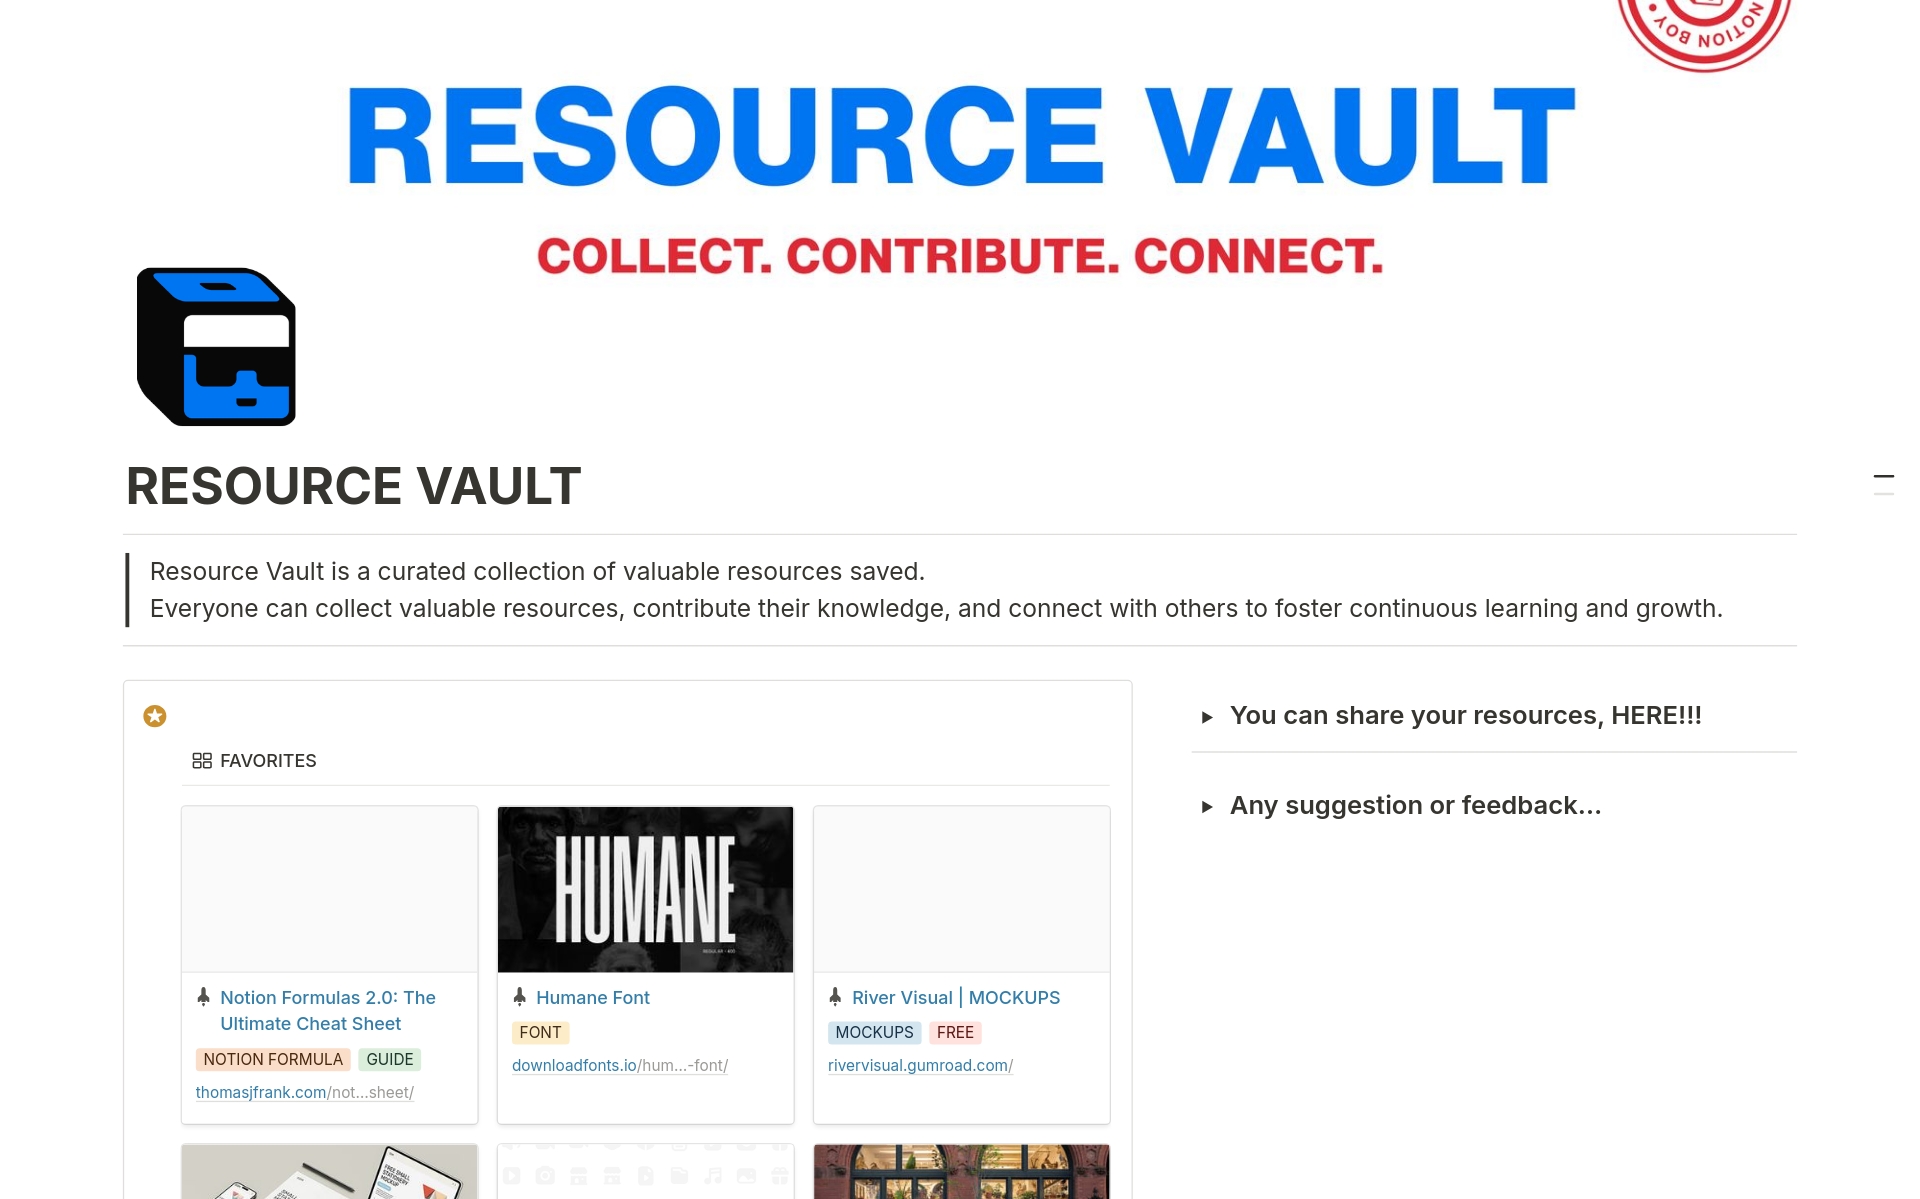 Aperçu du modèle de Resource Vault